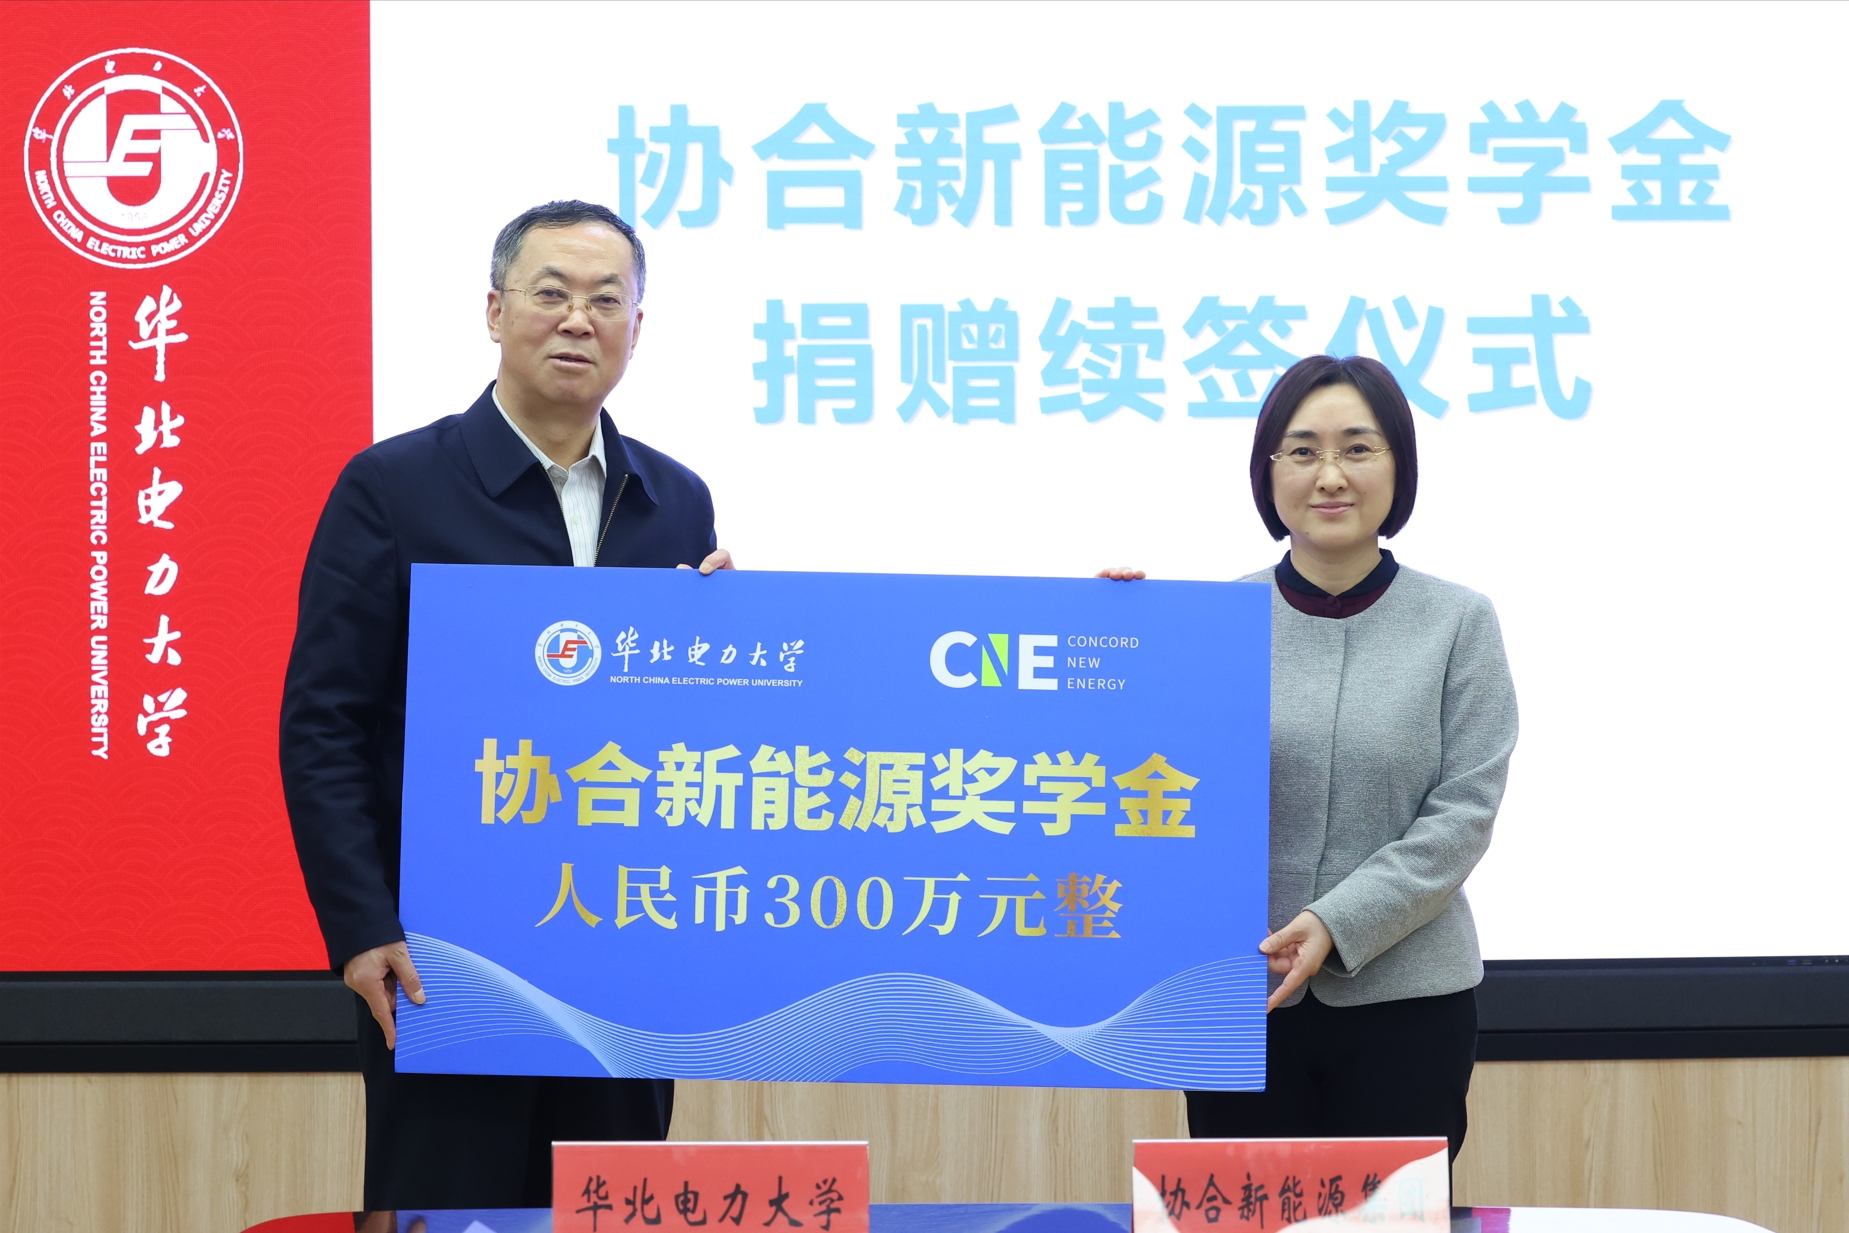 CNE, NCEPU sign fourth-term CNE Scholarship donation agreement